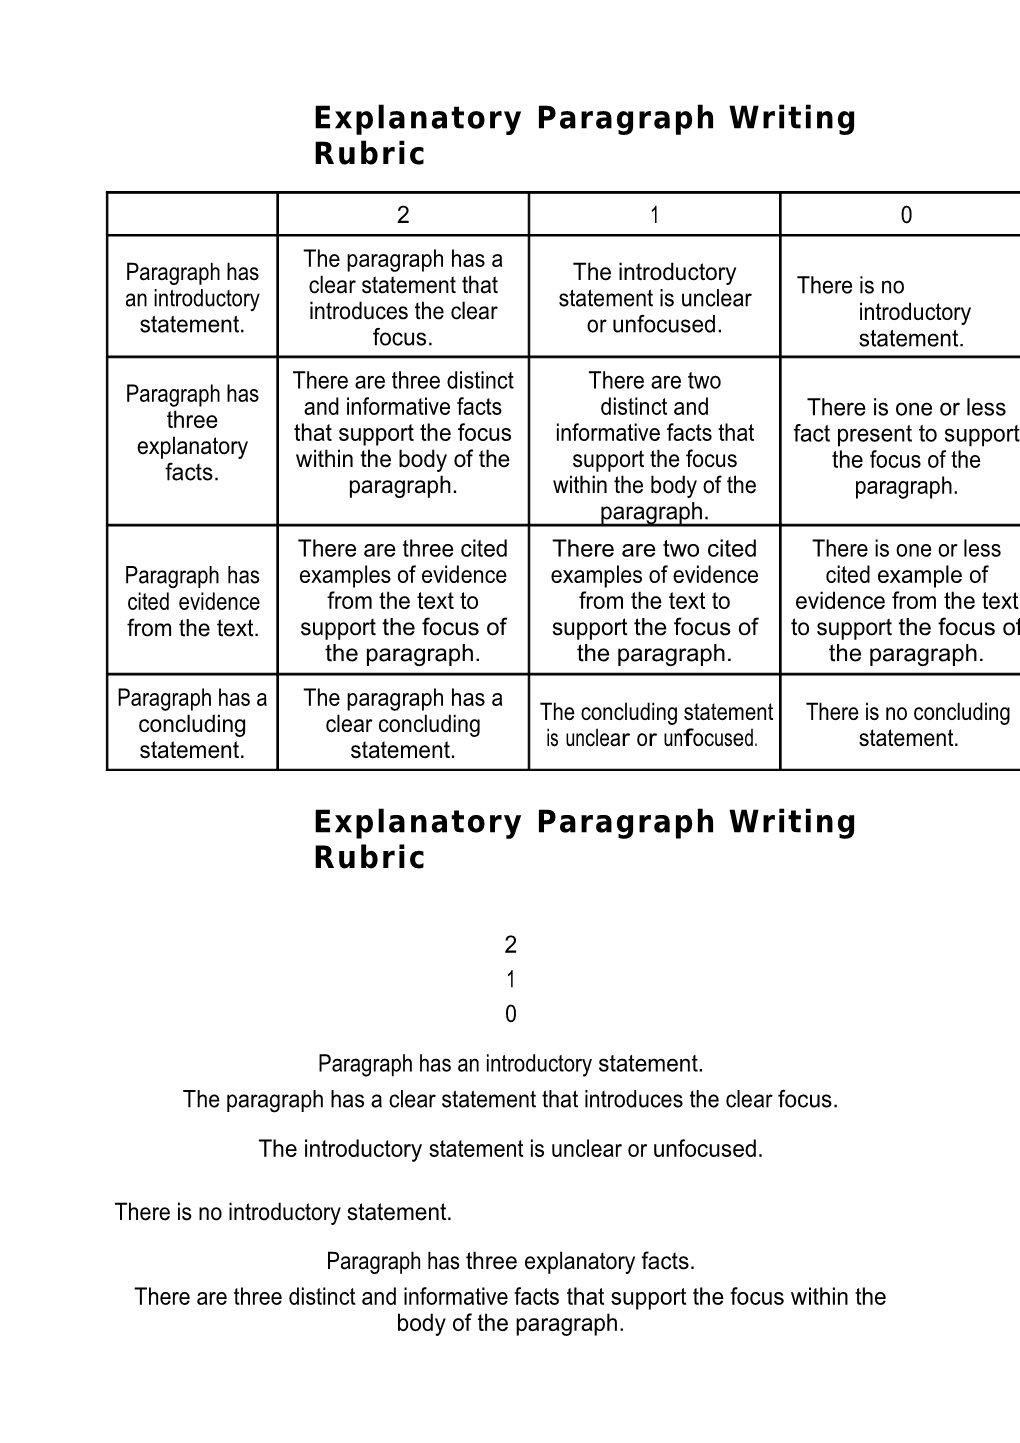 Explanatory Paragraph Writing Rubric